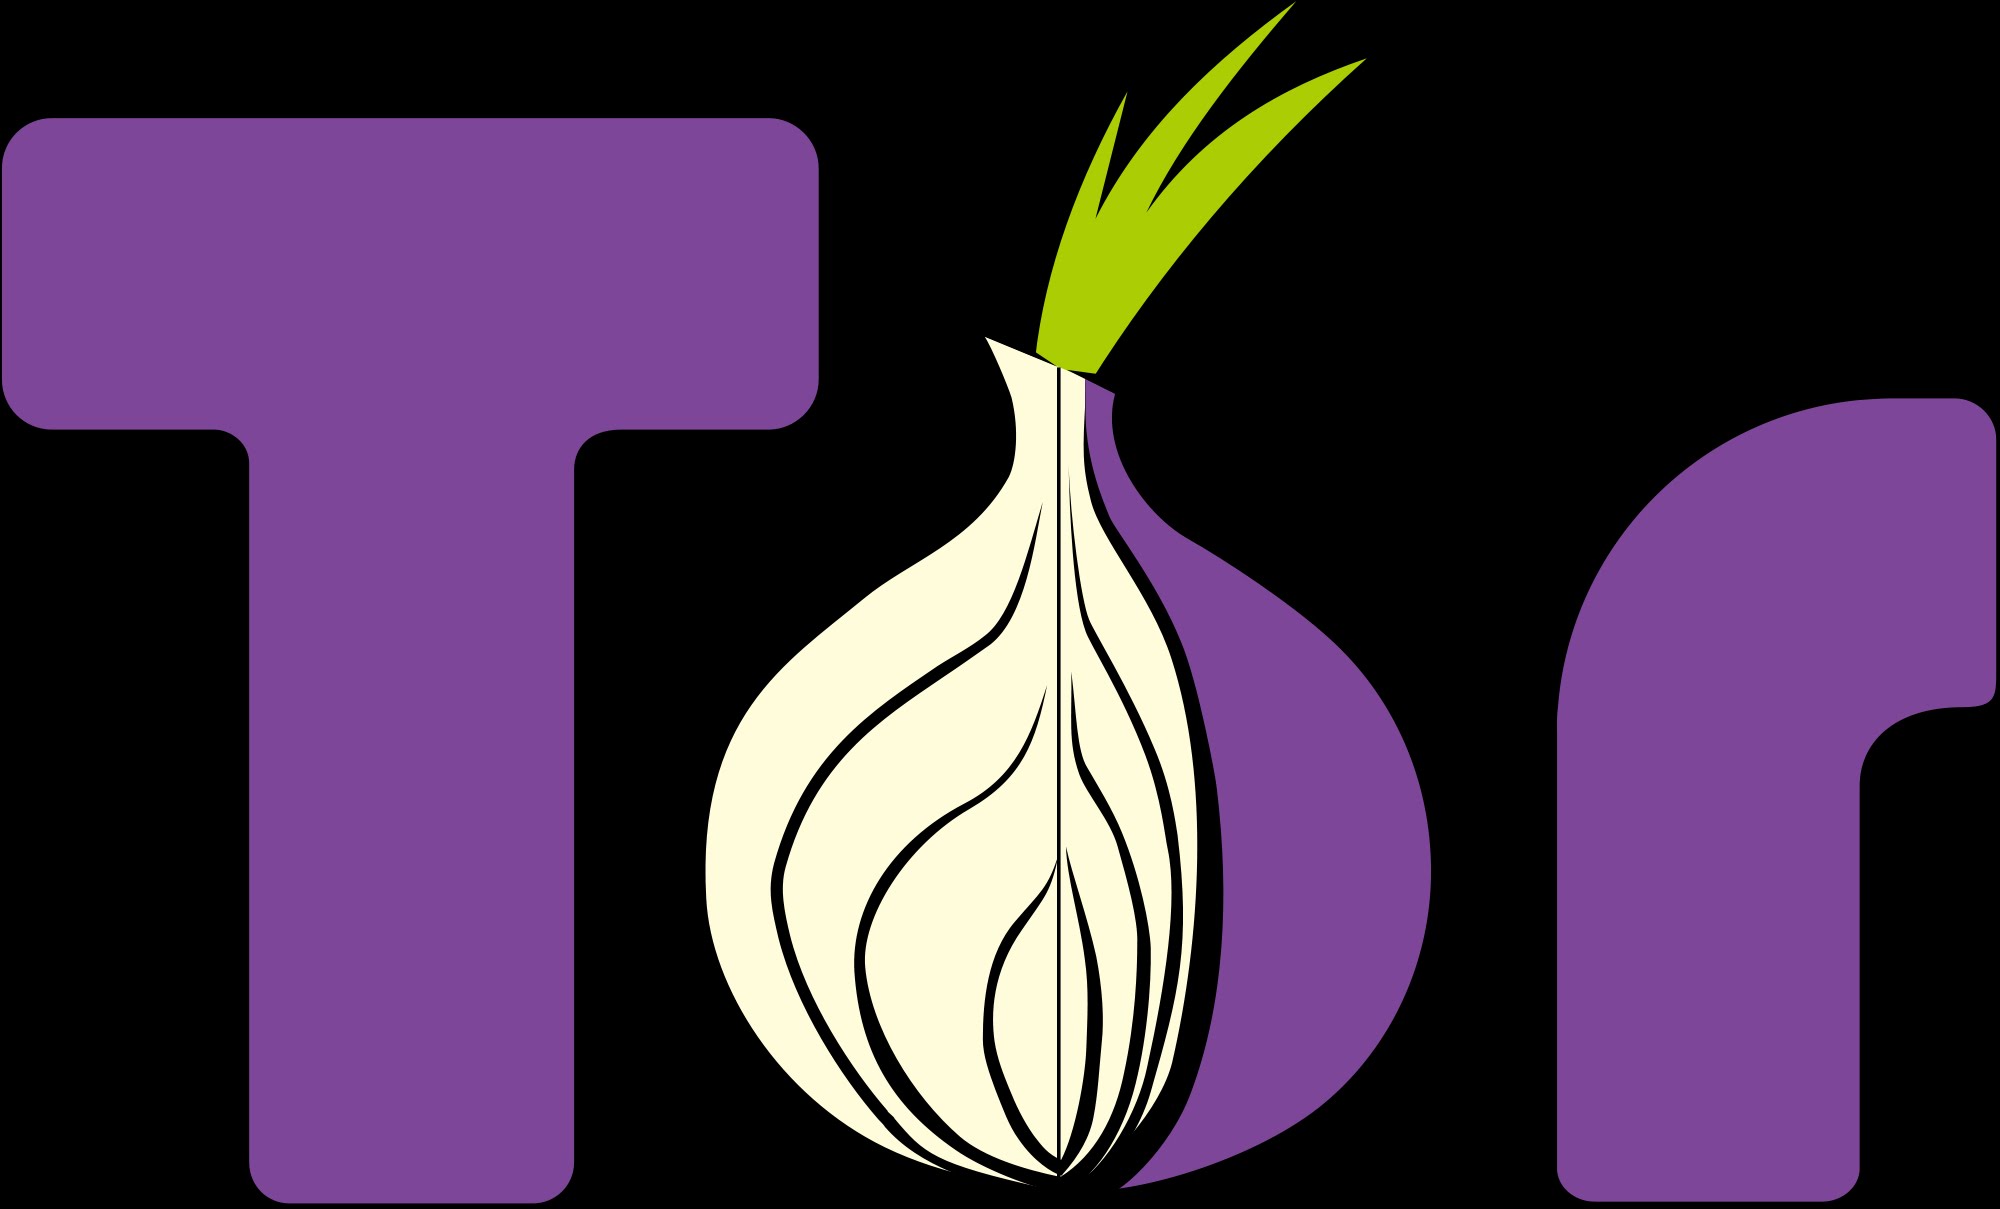 Tor wikipedia пиратская библиотека